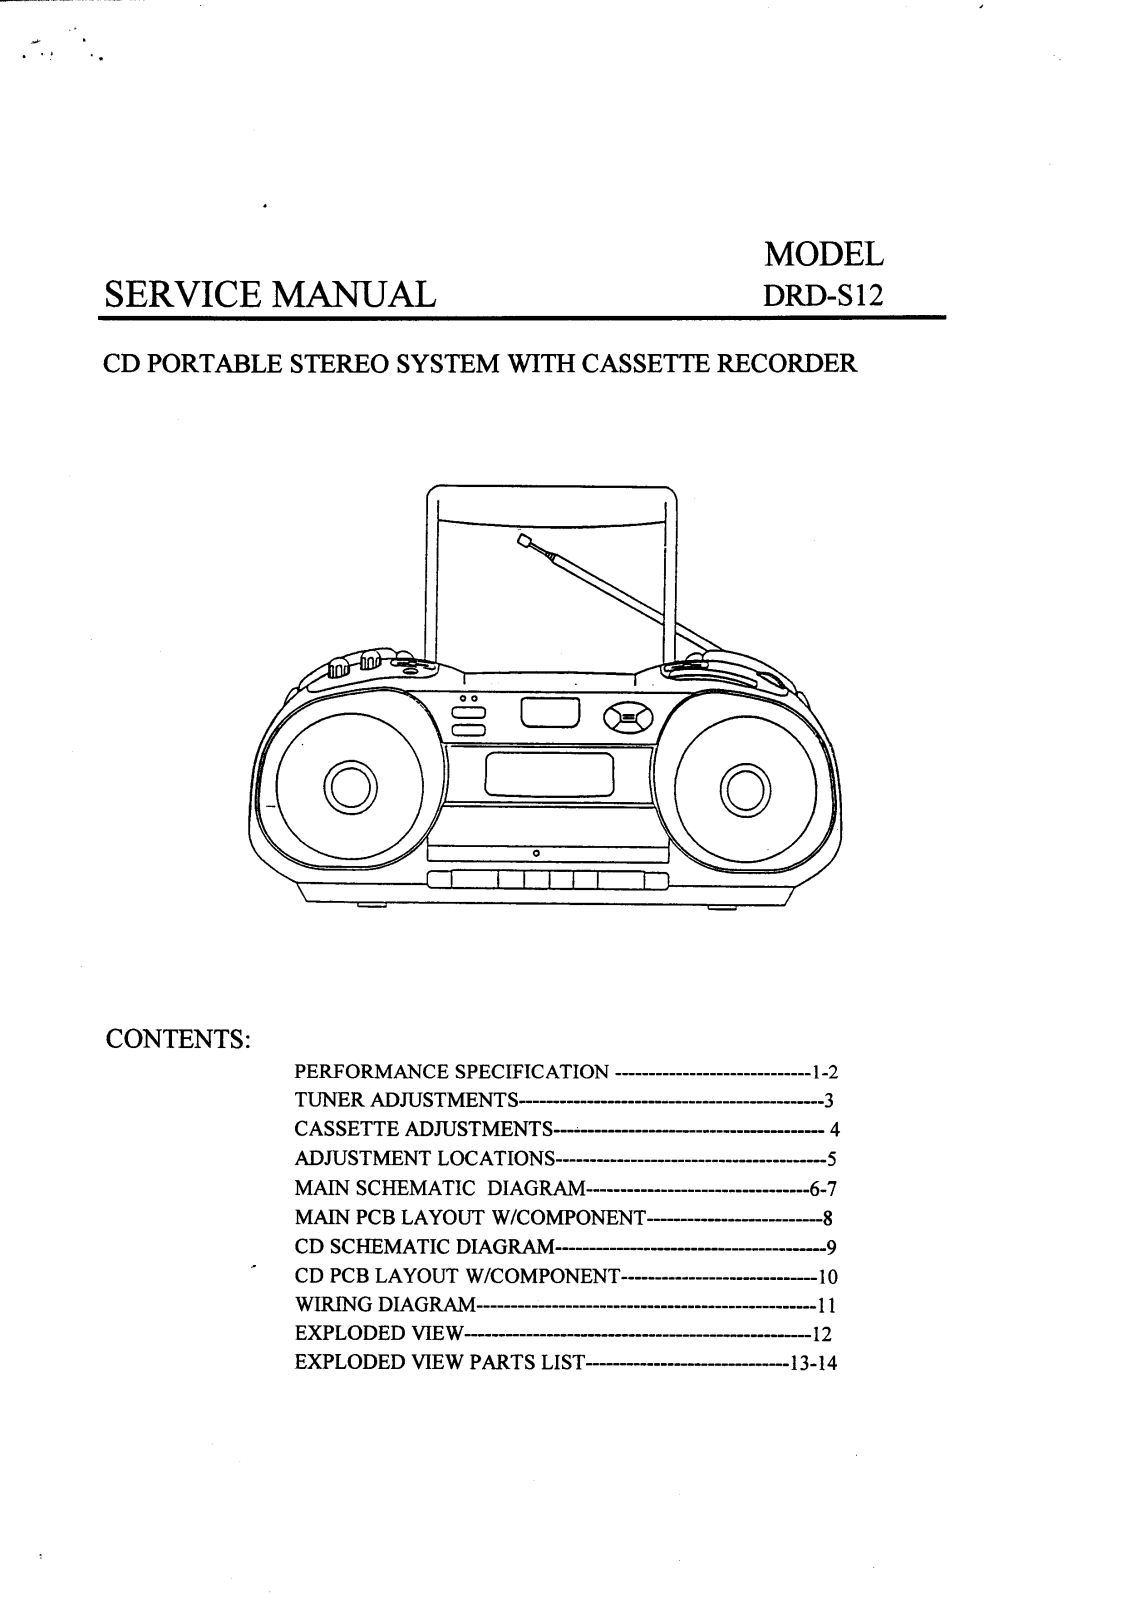 Daewoo DRD-S12 Service Manual